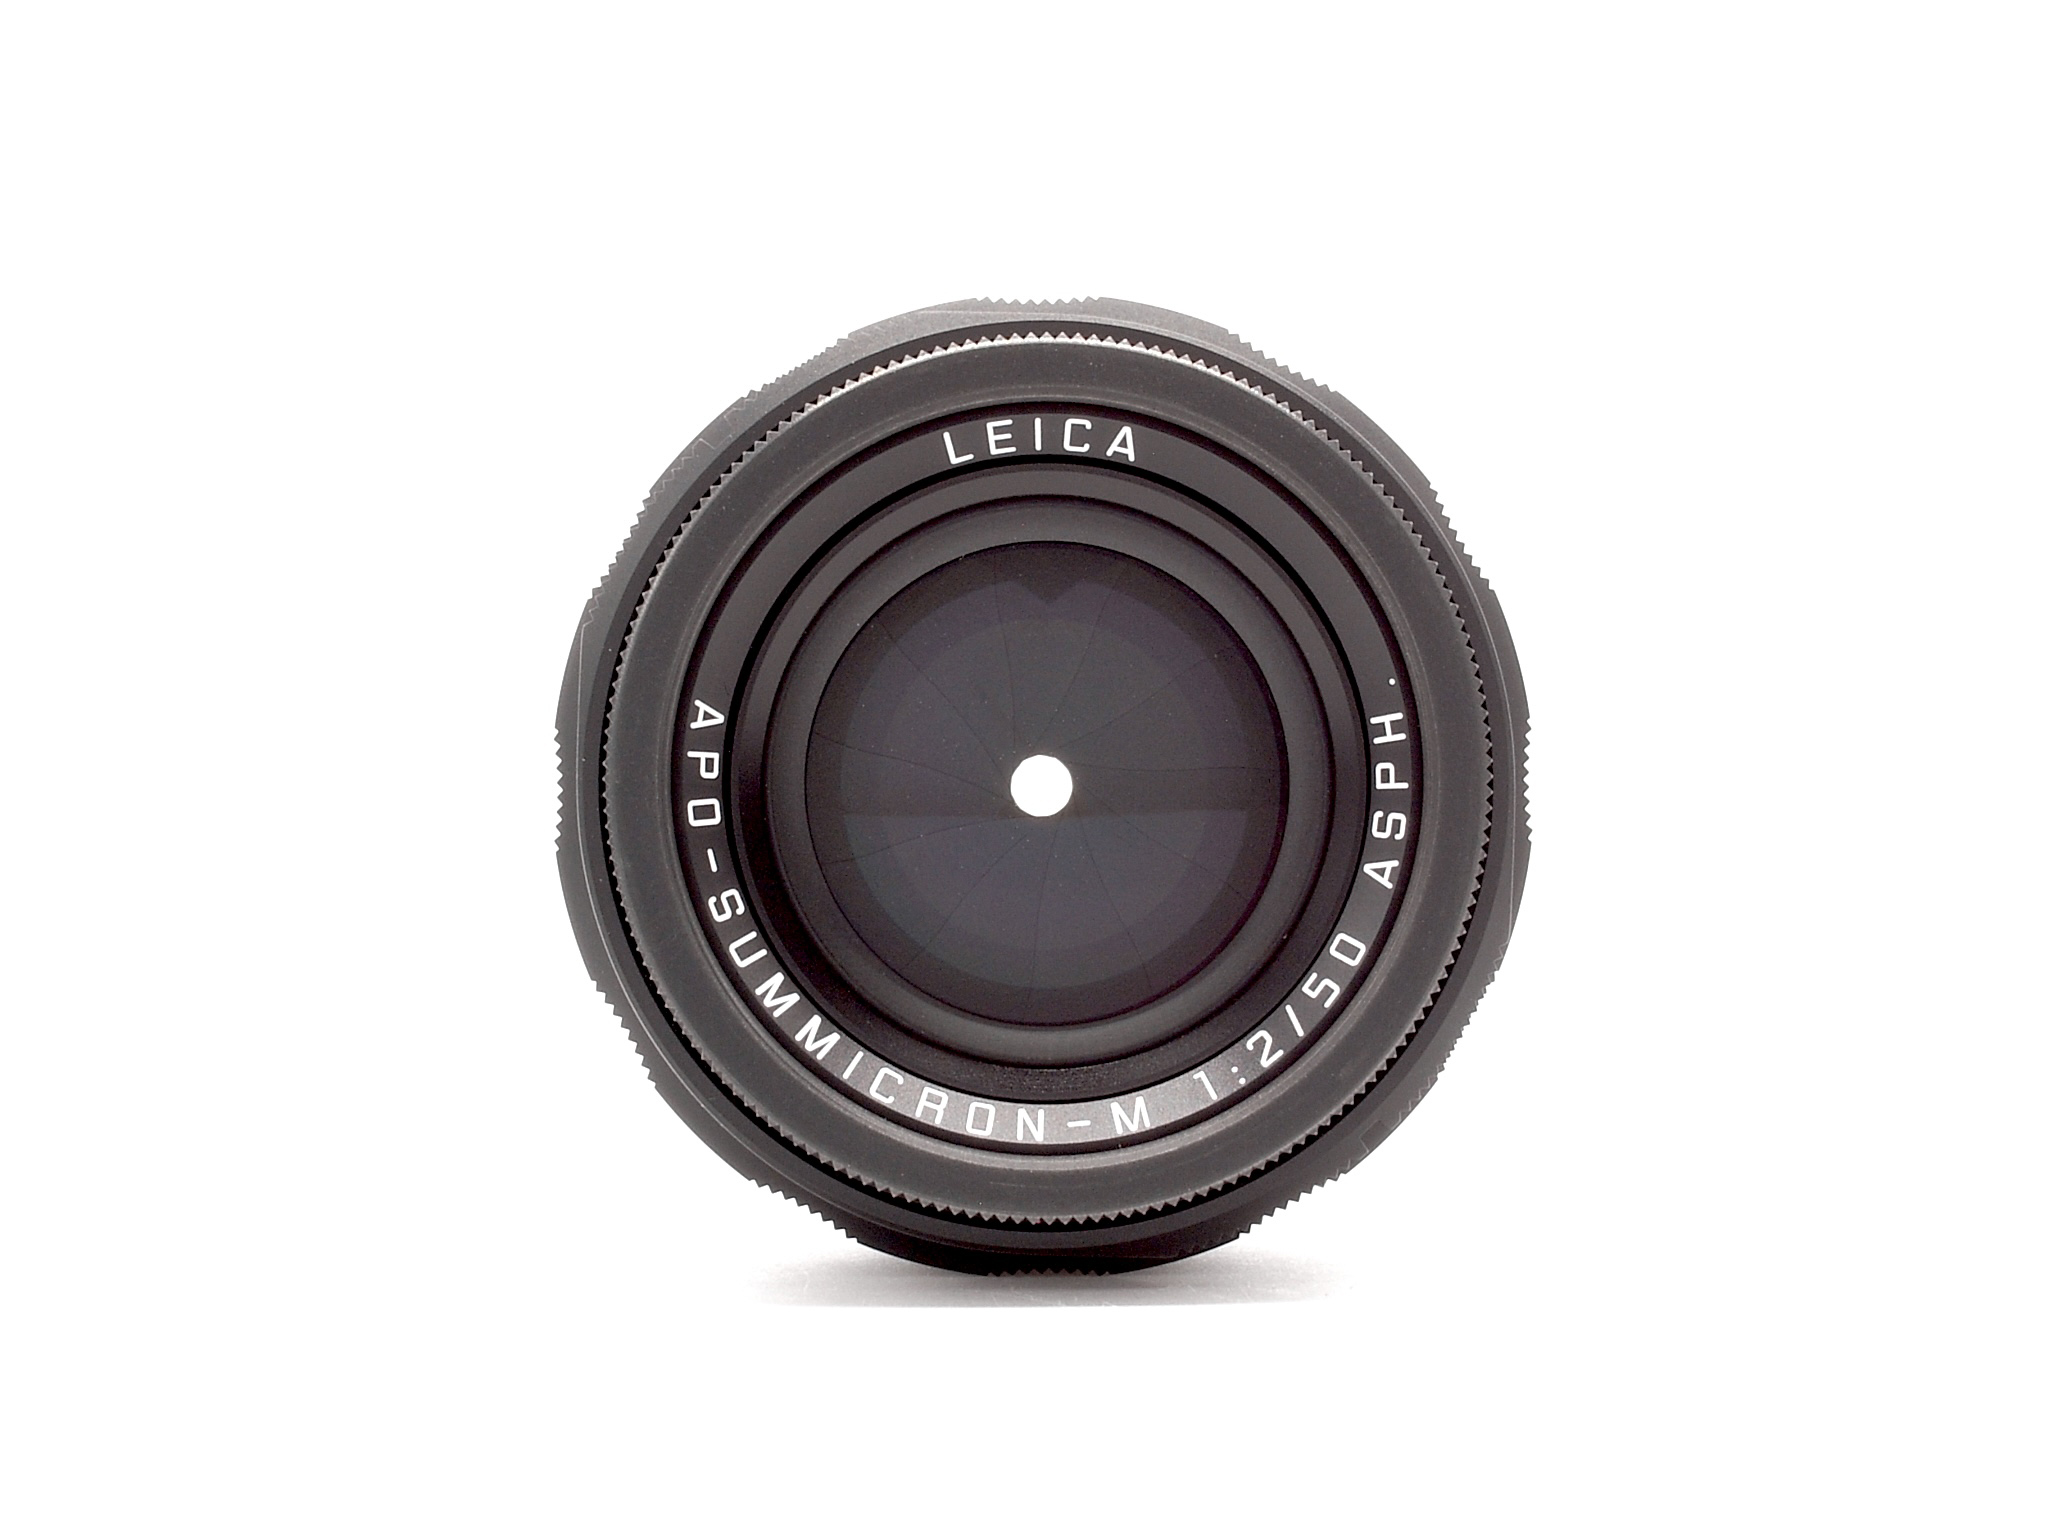 Leica APO-Summicron-M 2,0/50 ASPH. black chrome finish